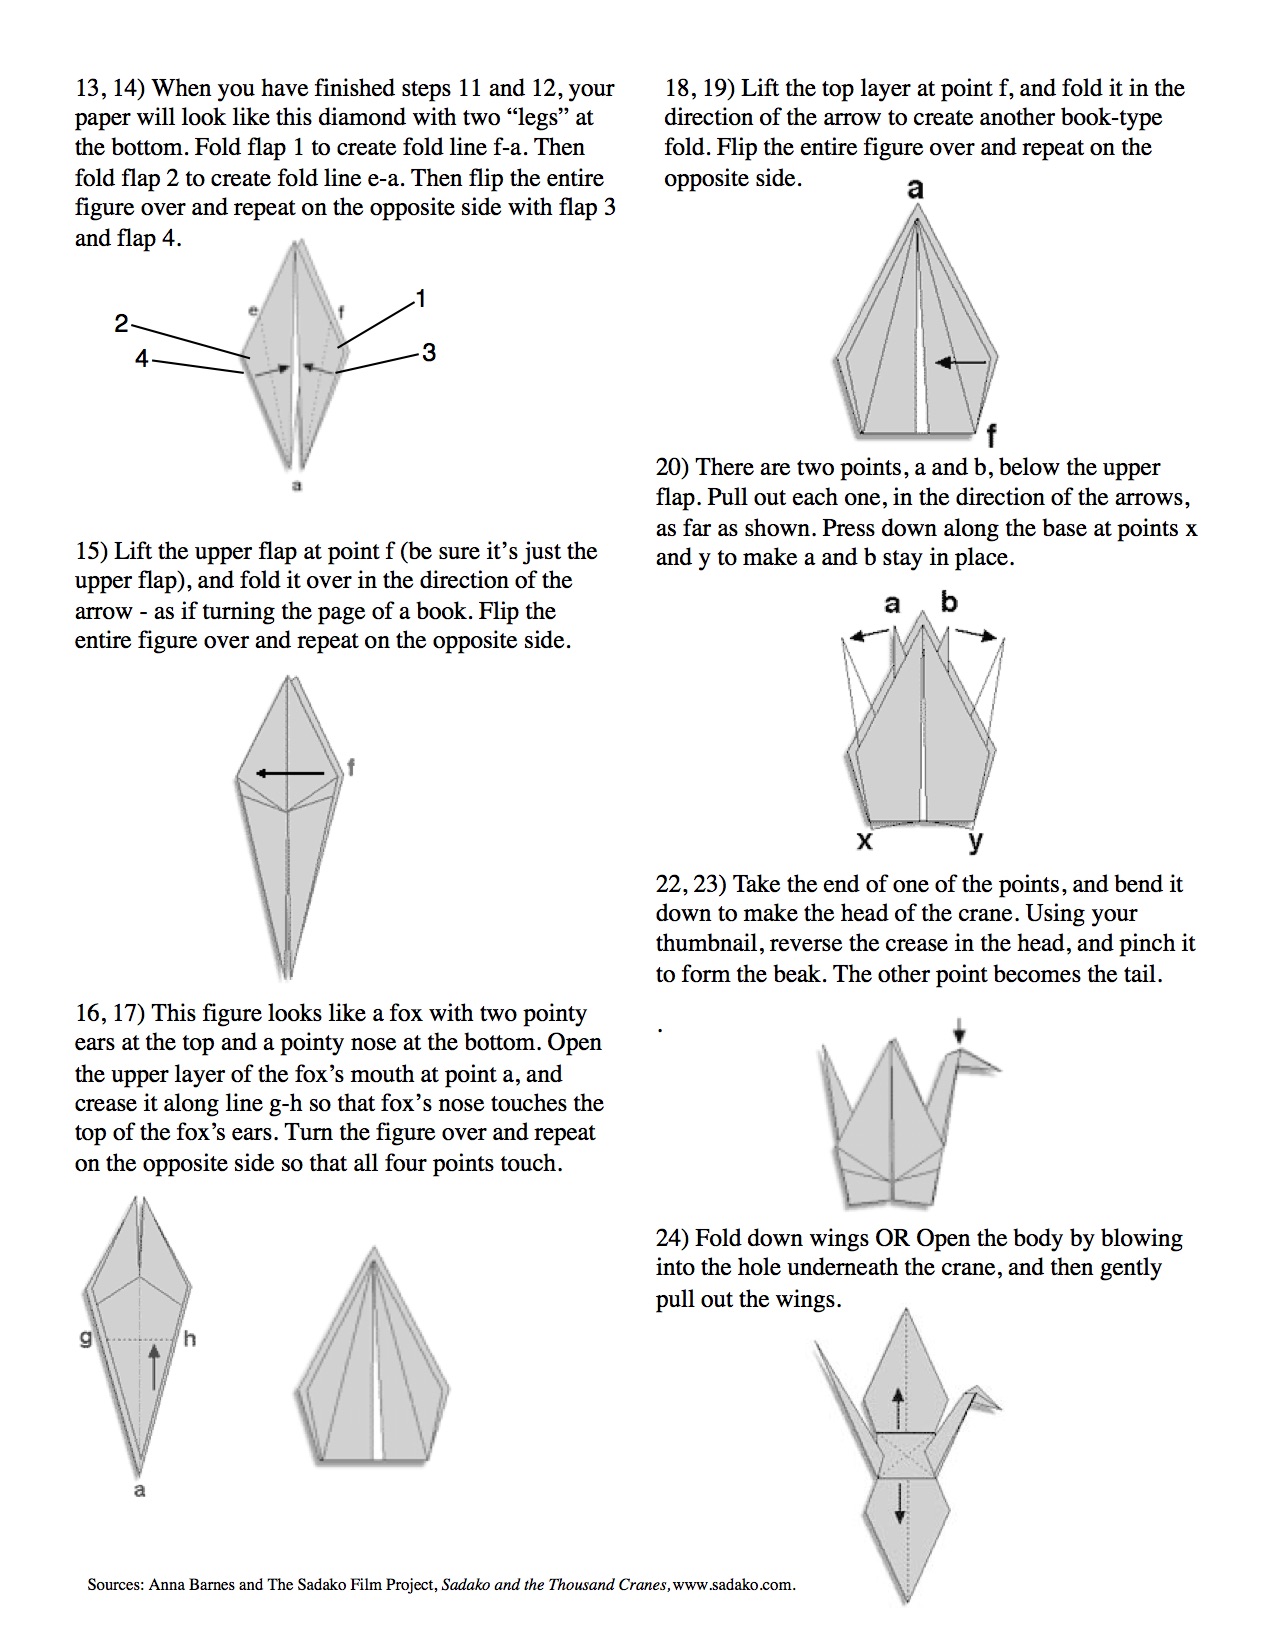 How to make a Paper Crane Origami?